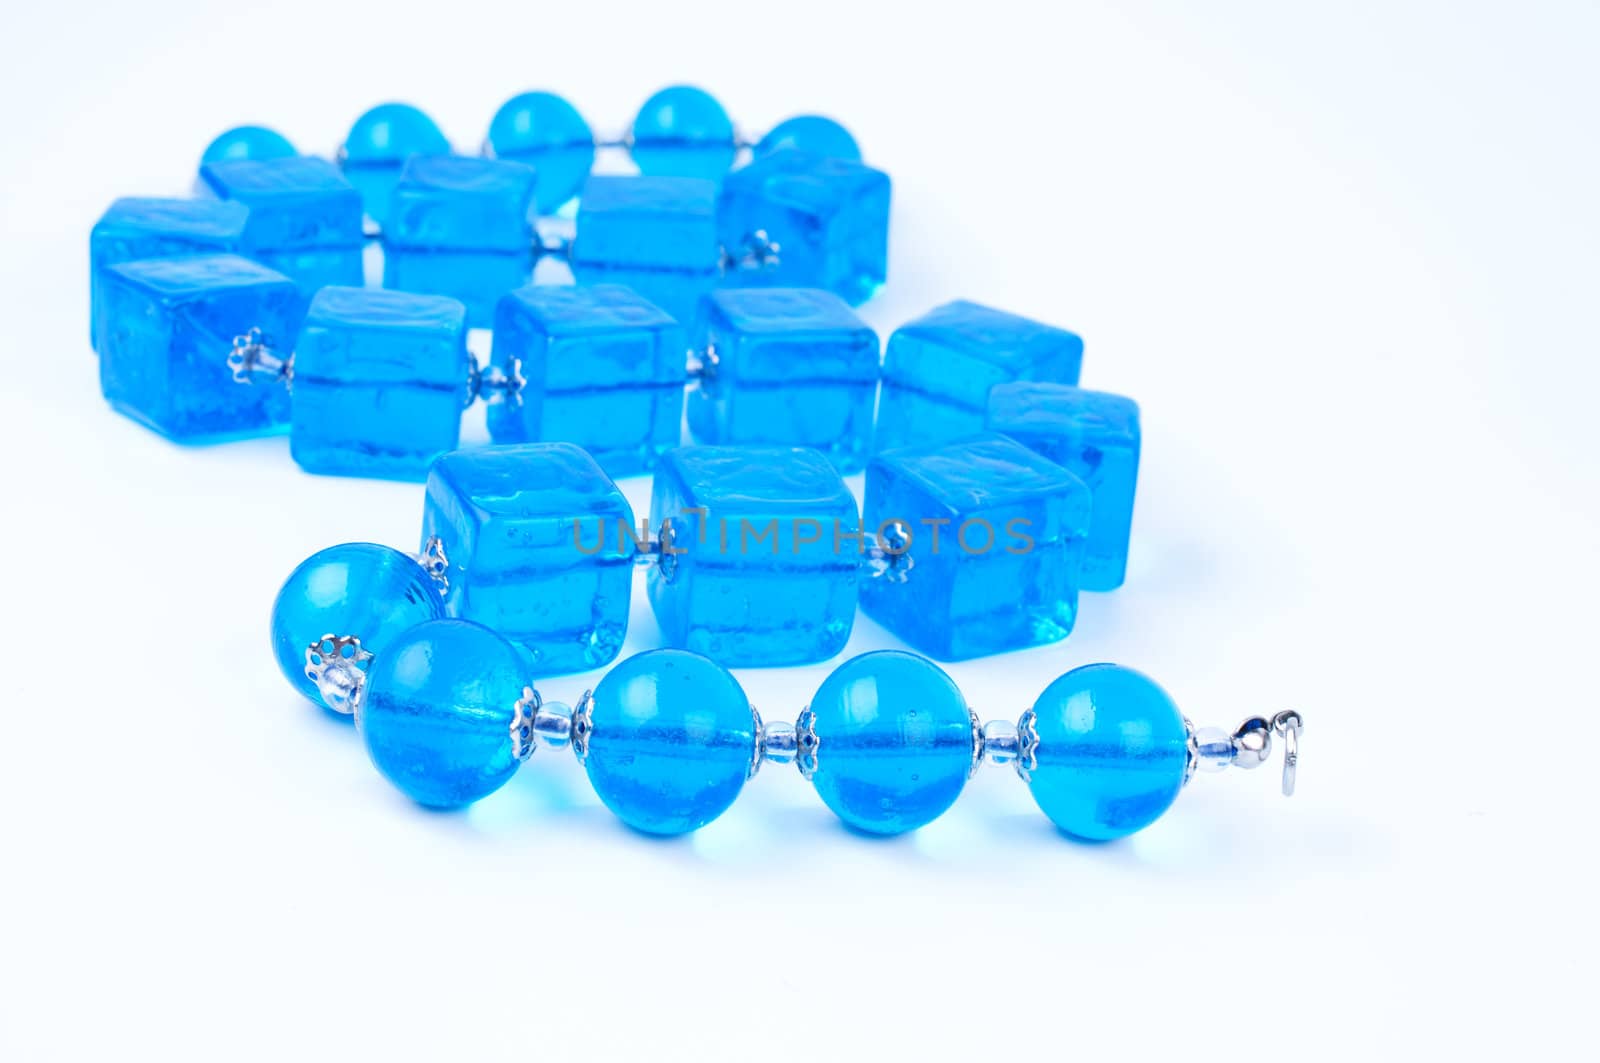 Blue glass beads on white background by Nanisimova